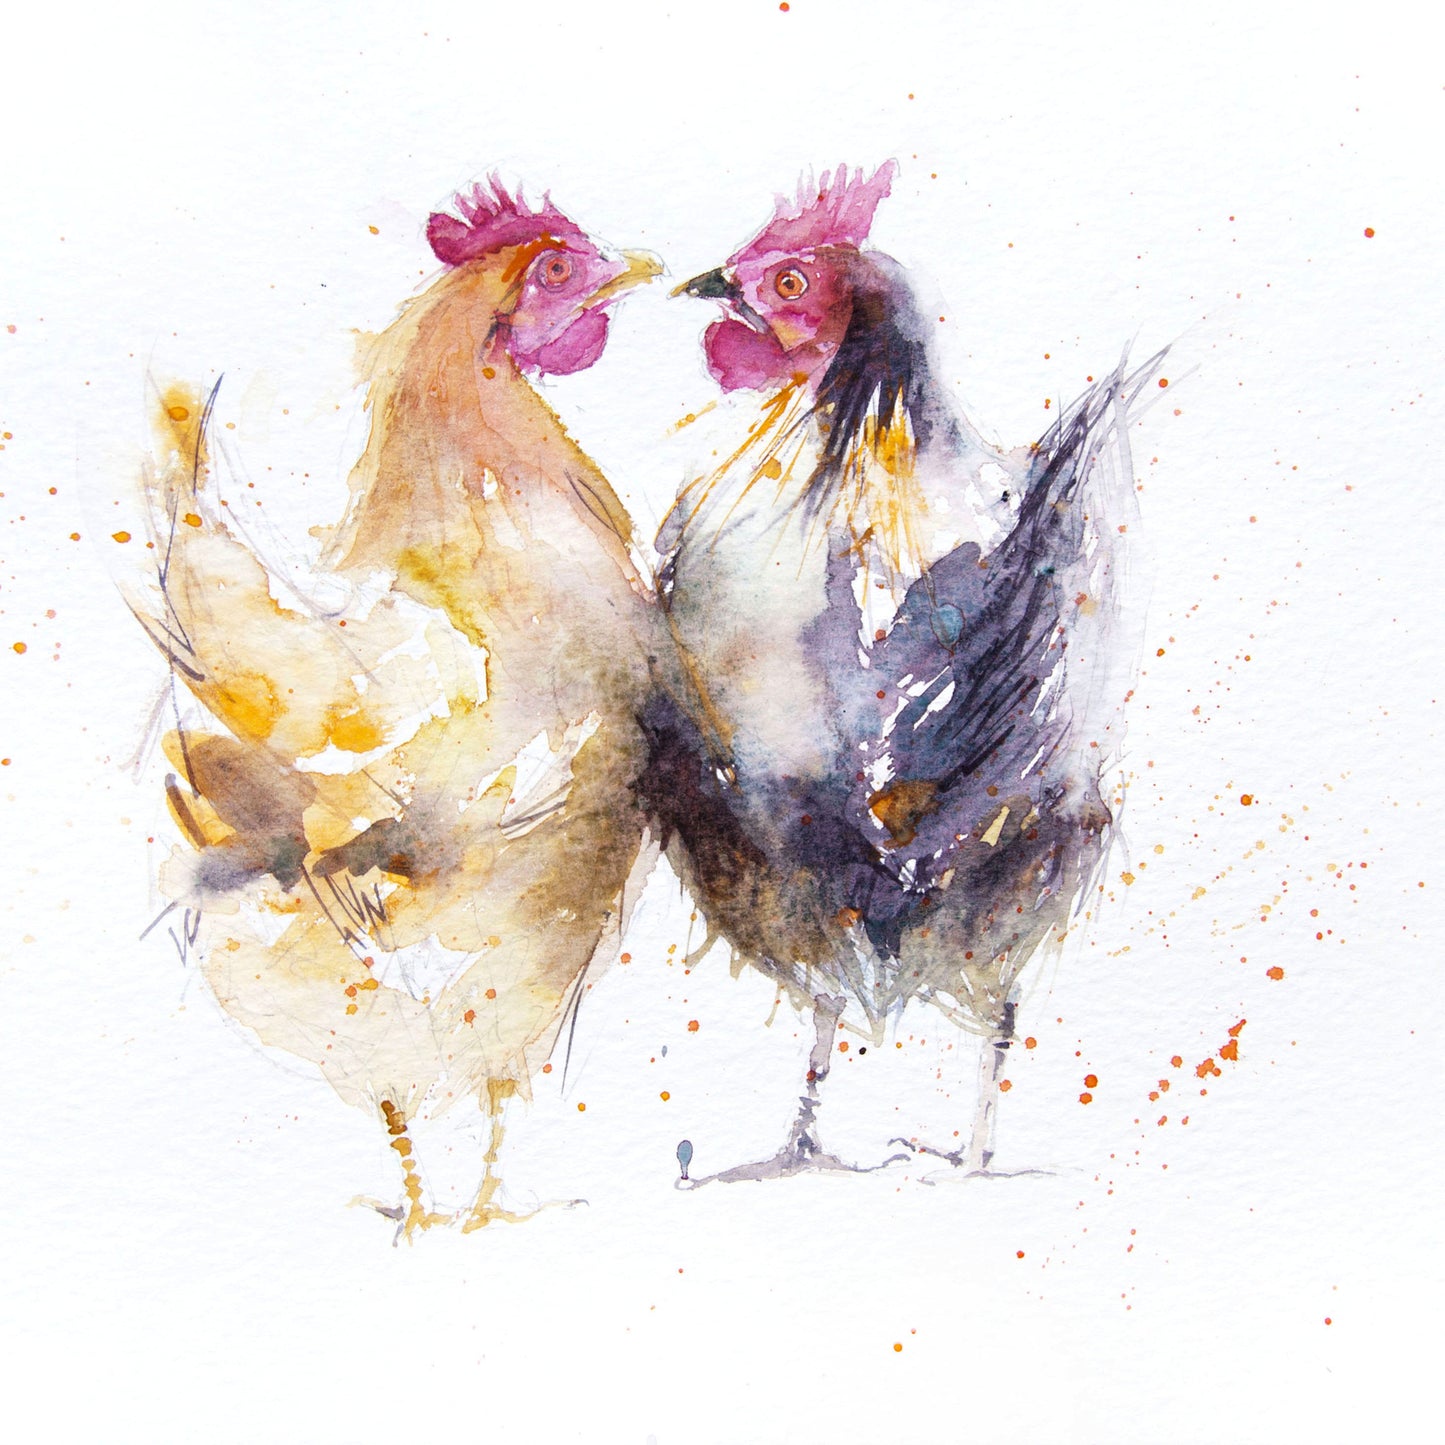 signed Open edition print - 2 Hens - Jen Buckley Art limited edition animal art prints